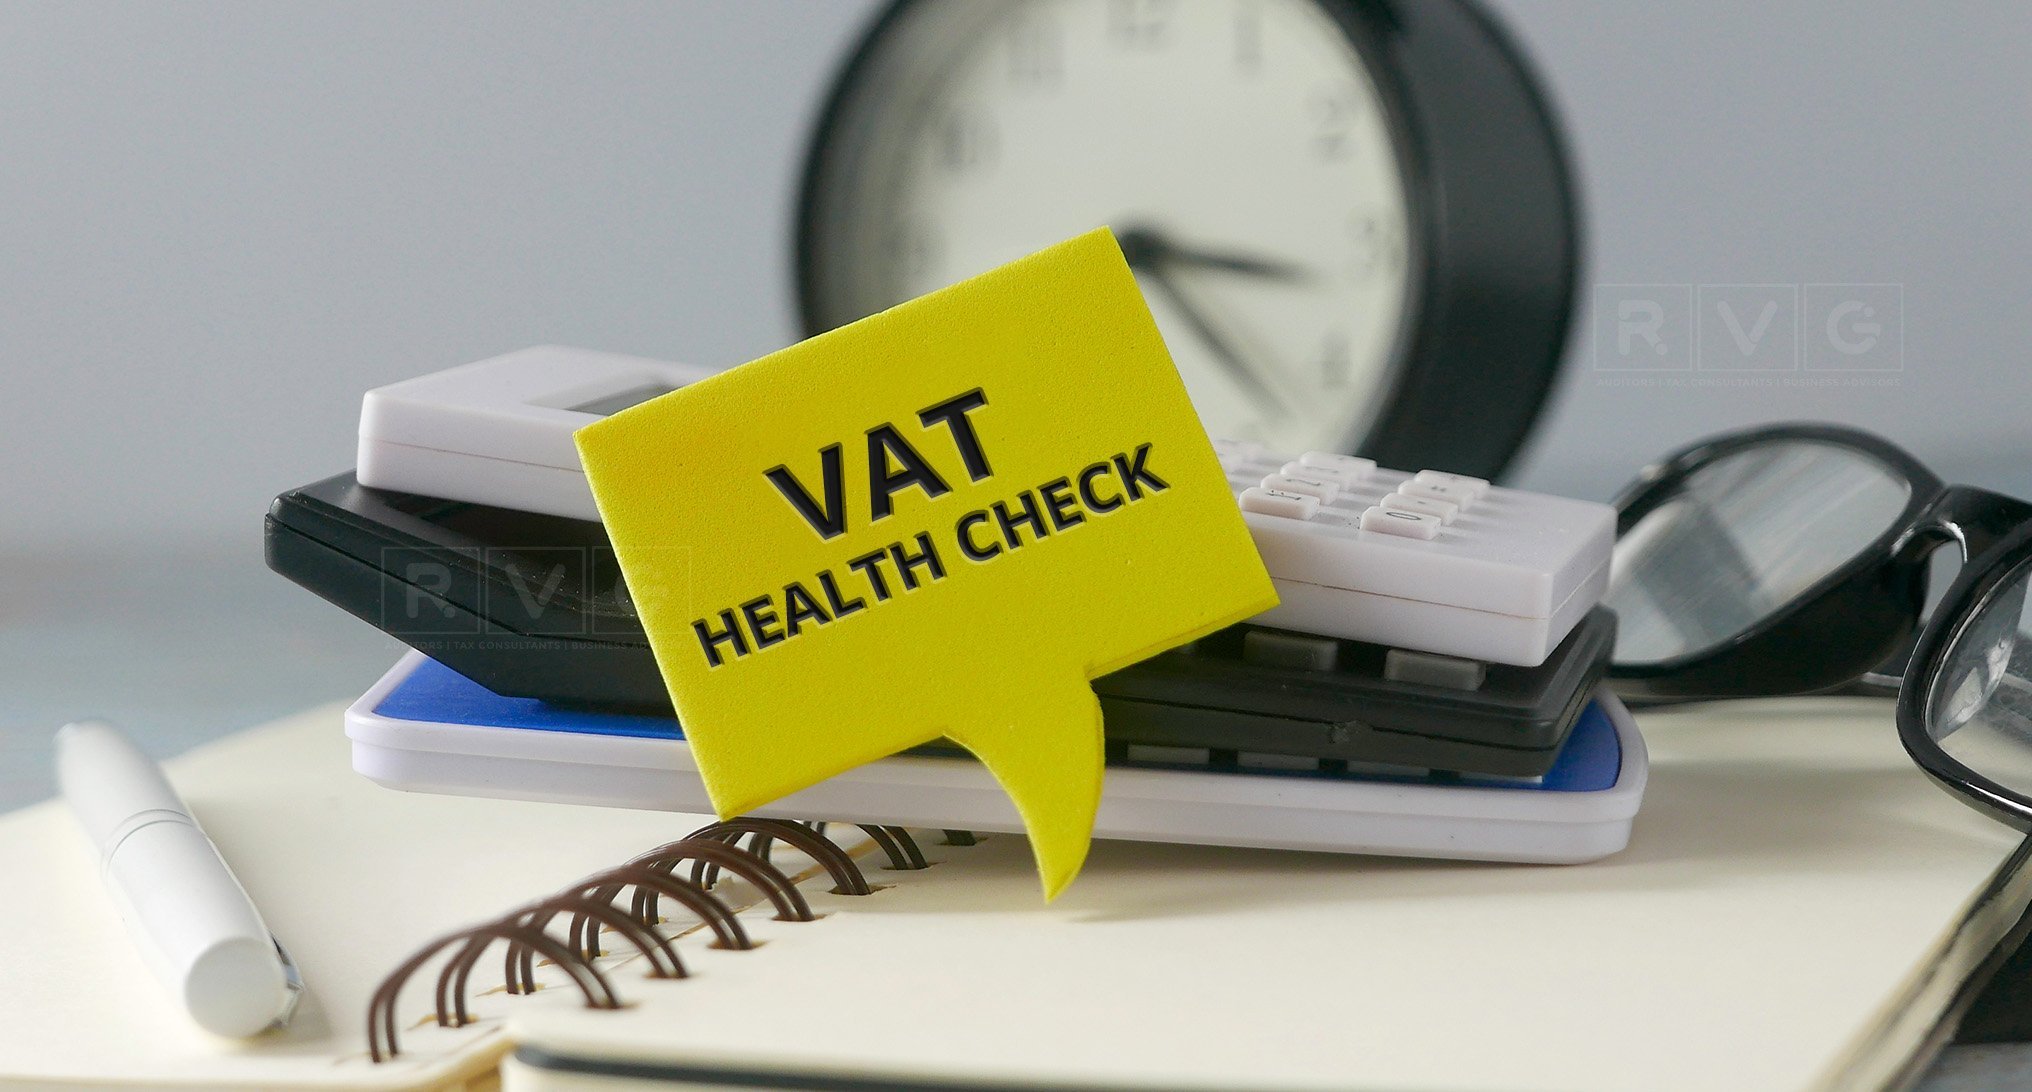 vat health check services